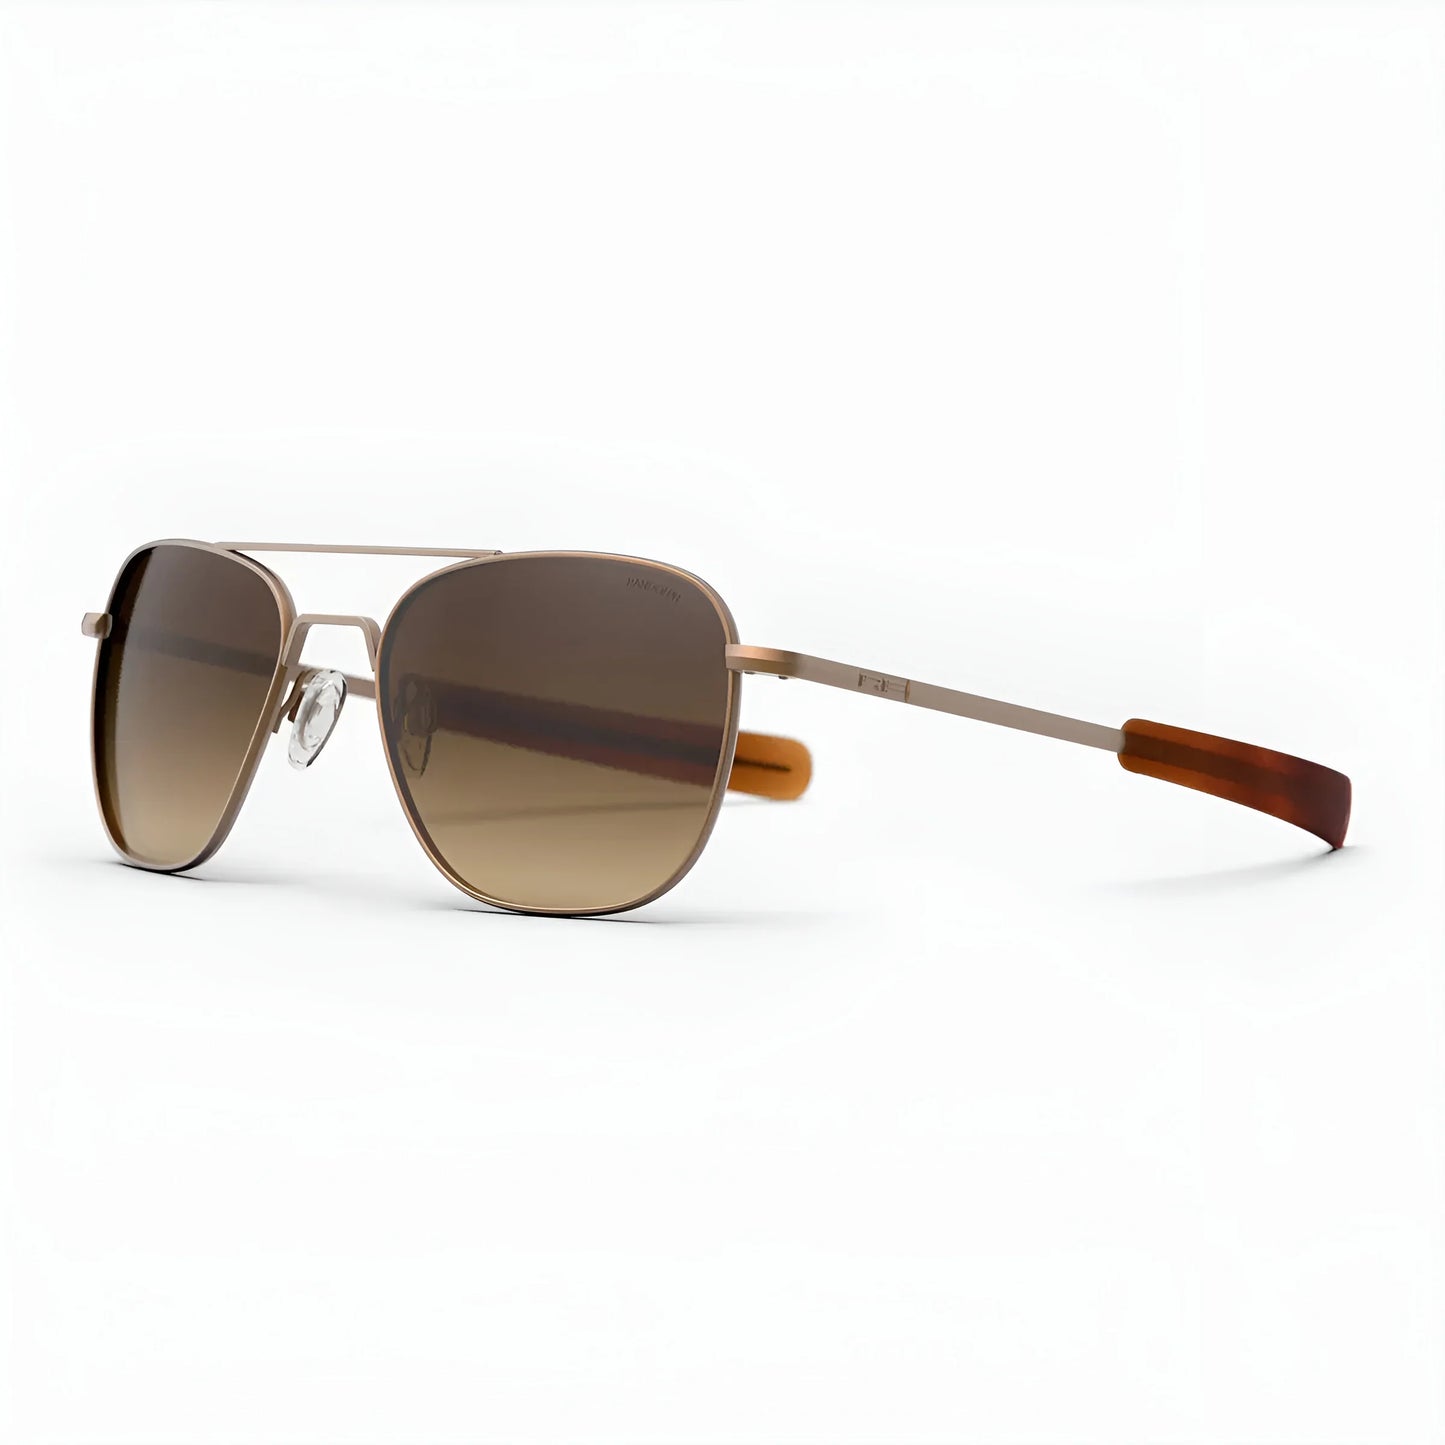 Randolph AVIATOR Sunglasses | Size 55 / 22k Satin Chocolate Gold / Cape Sand Polarized Gradient Nylon